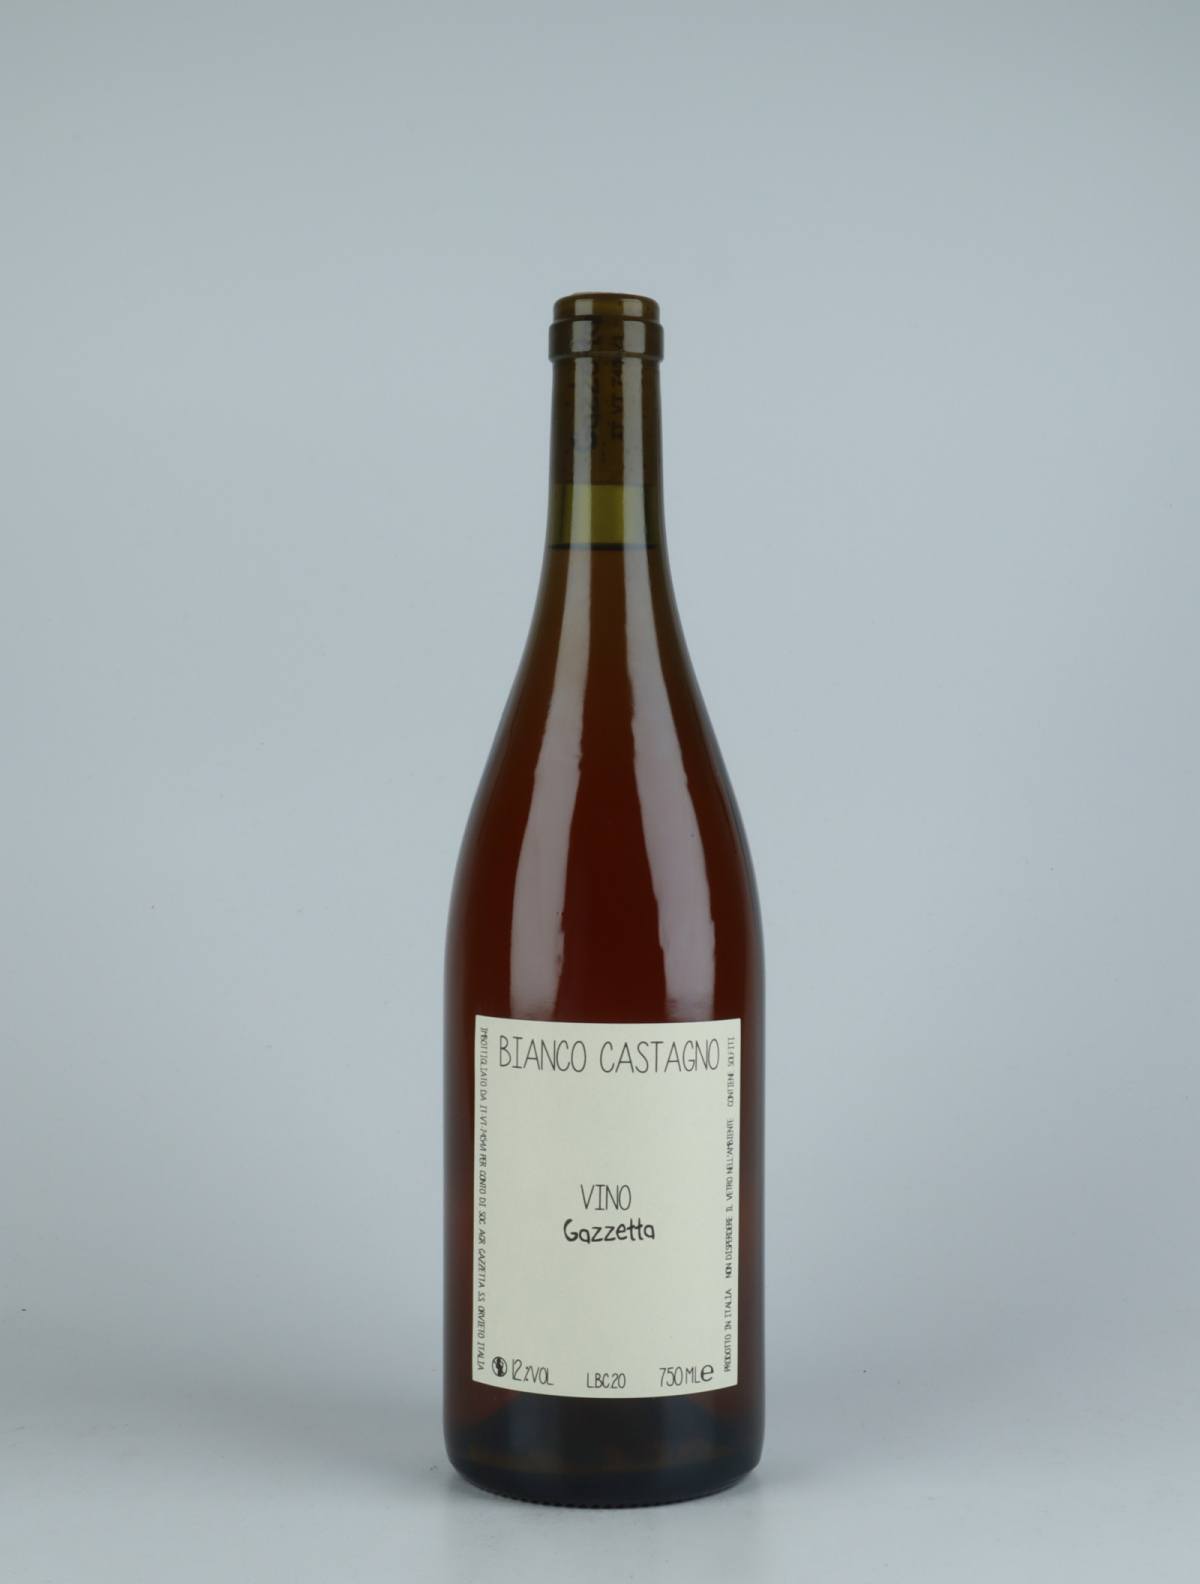 En flaske 2020 Vino Bianco Castagno Orange vin fra Gazzetta, Lazio i Italien